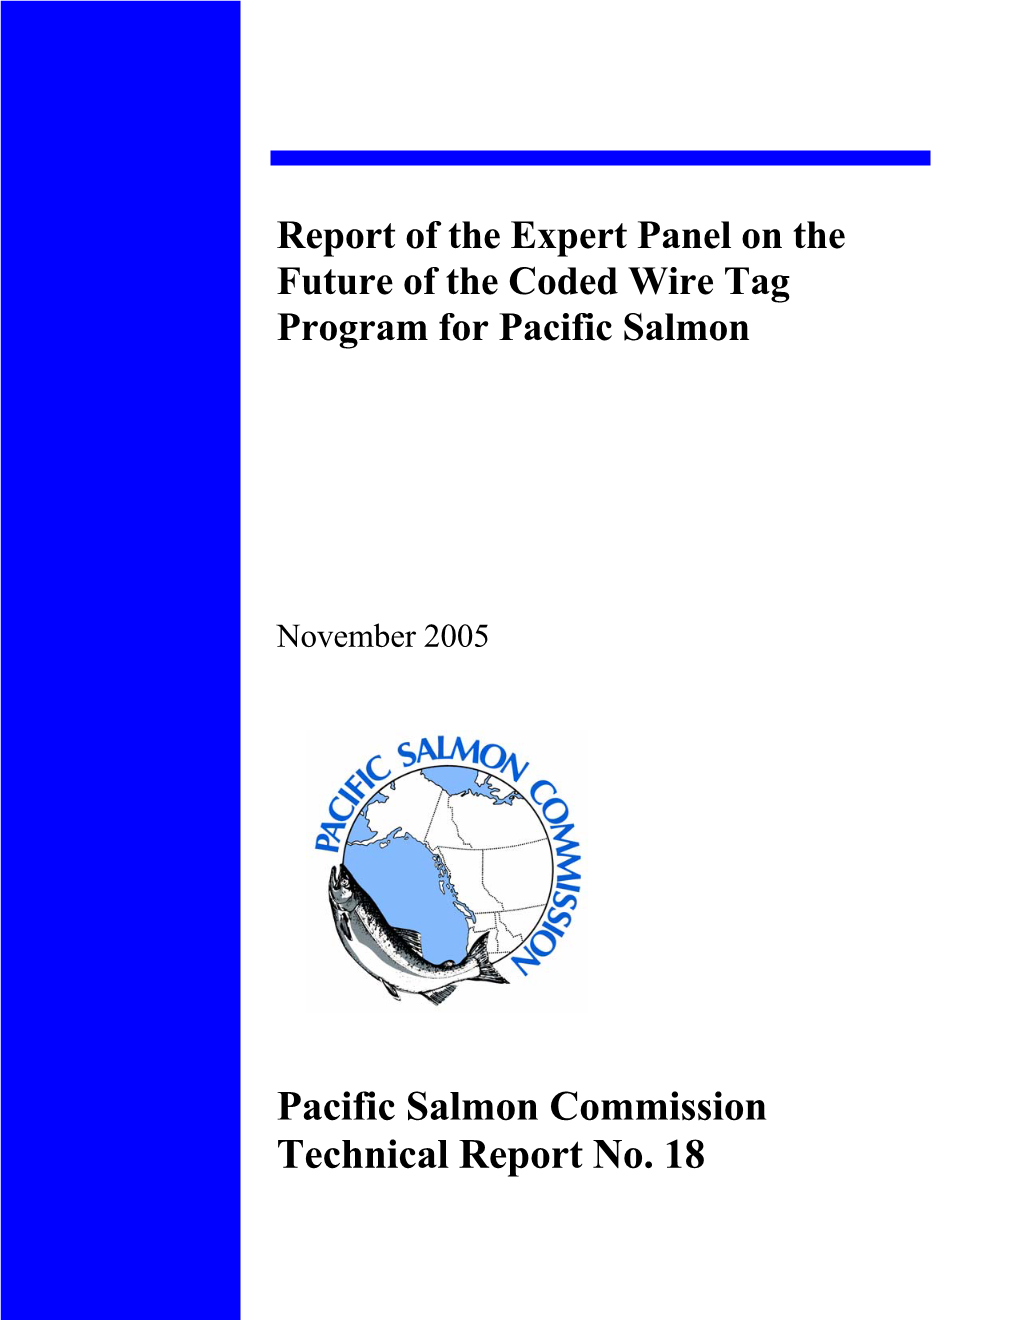 Pacific Salmon Commission Technical Report No. 18